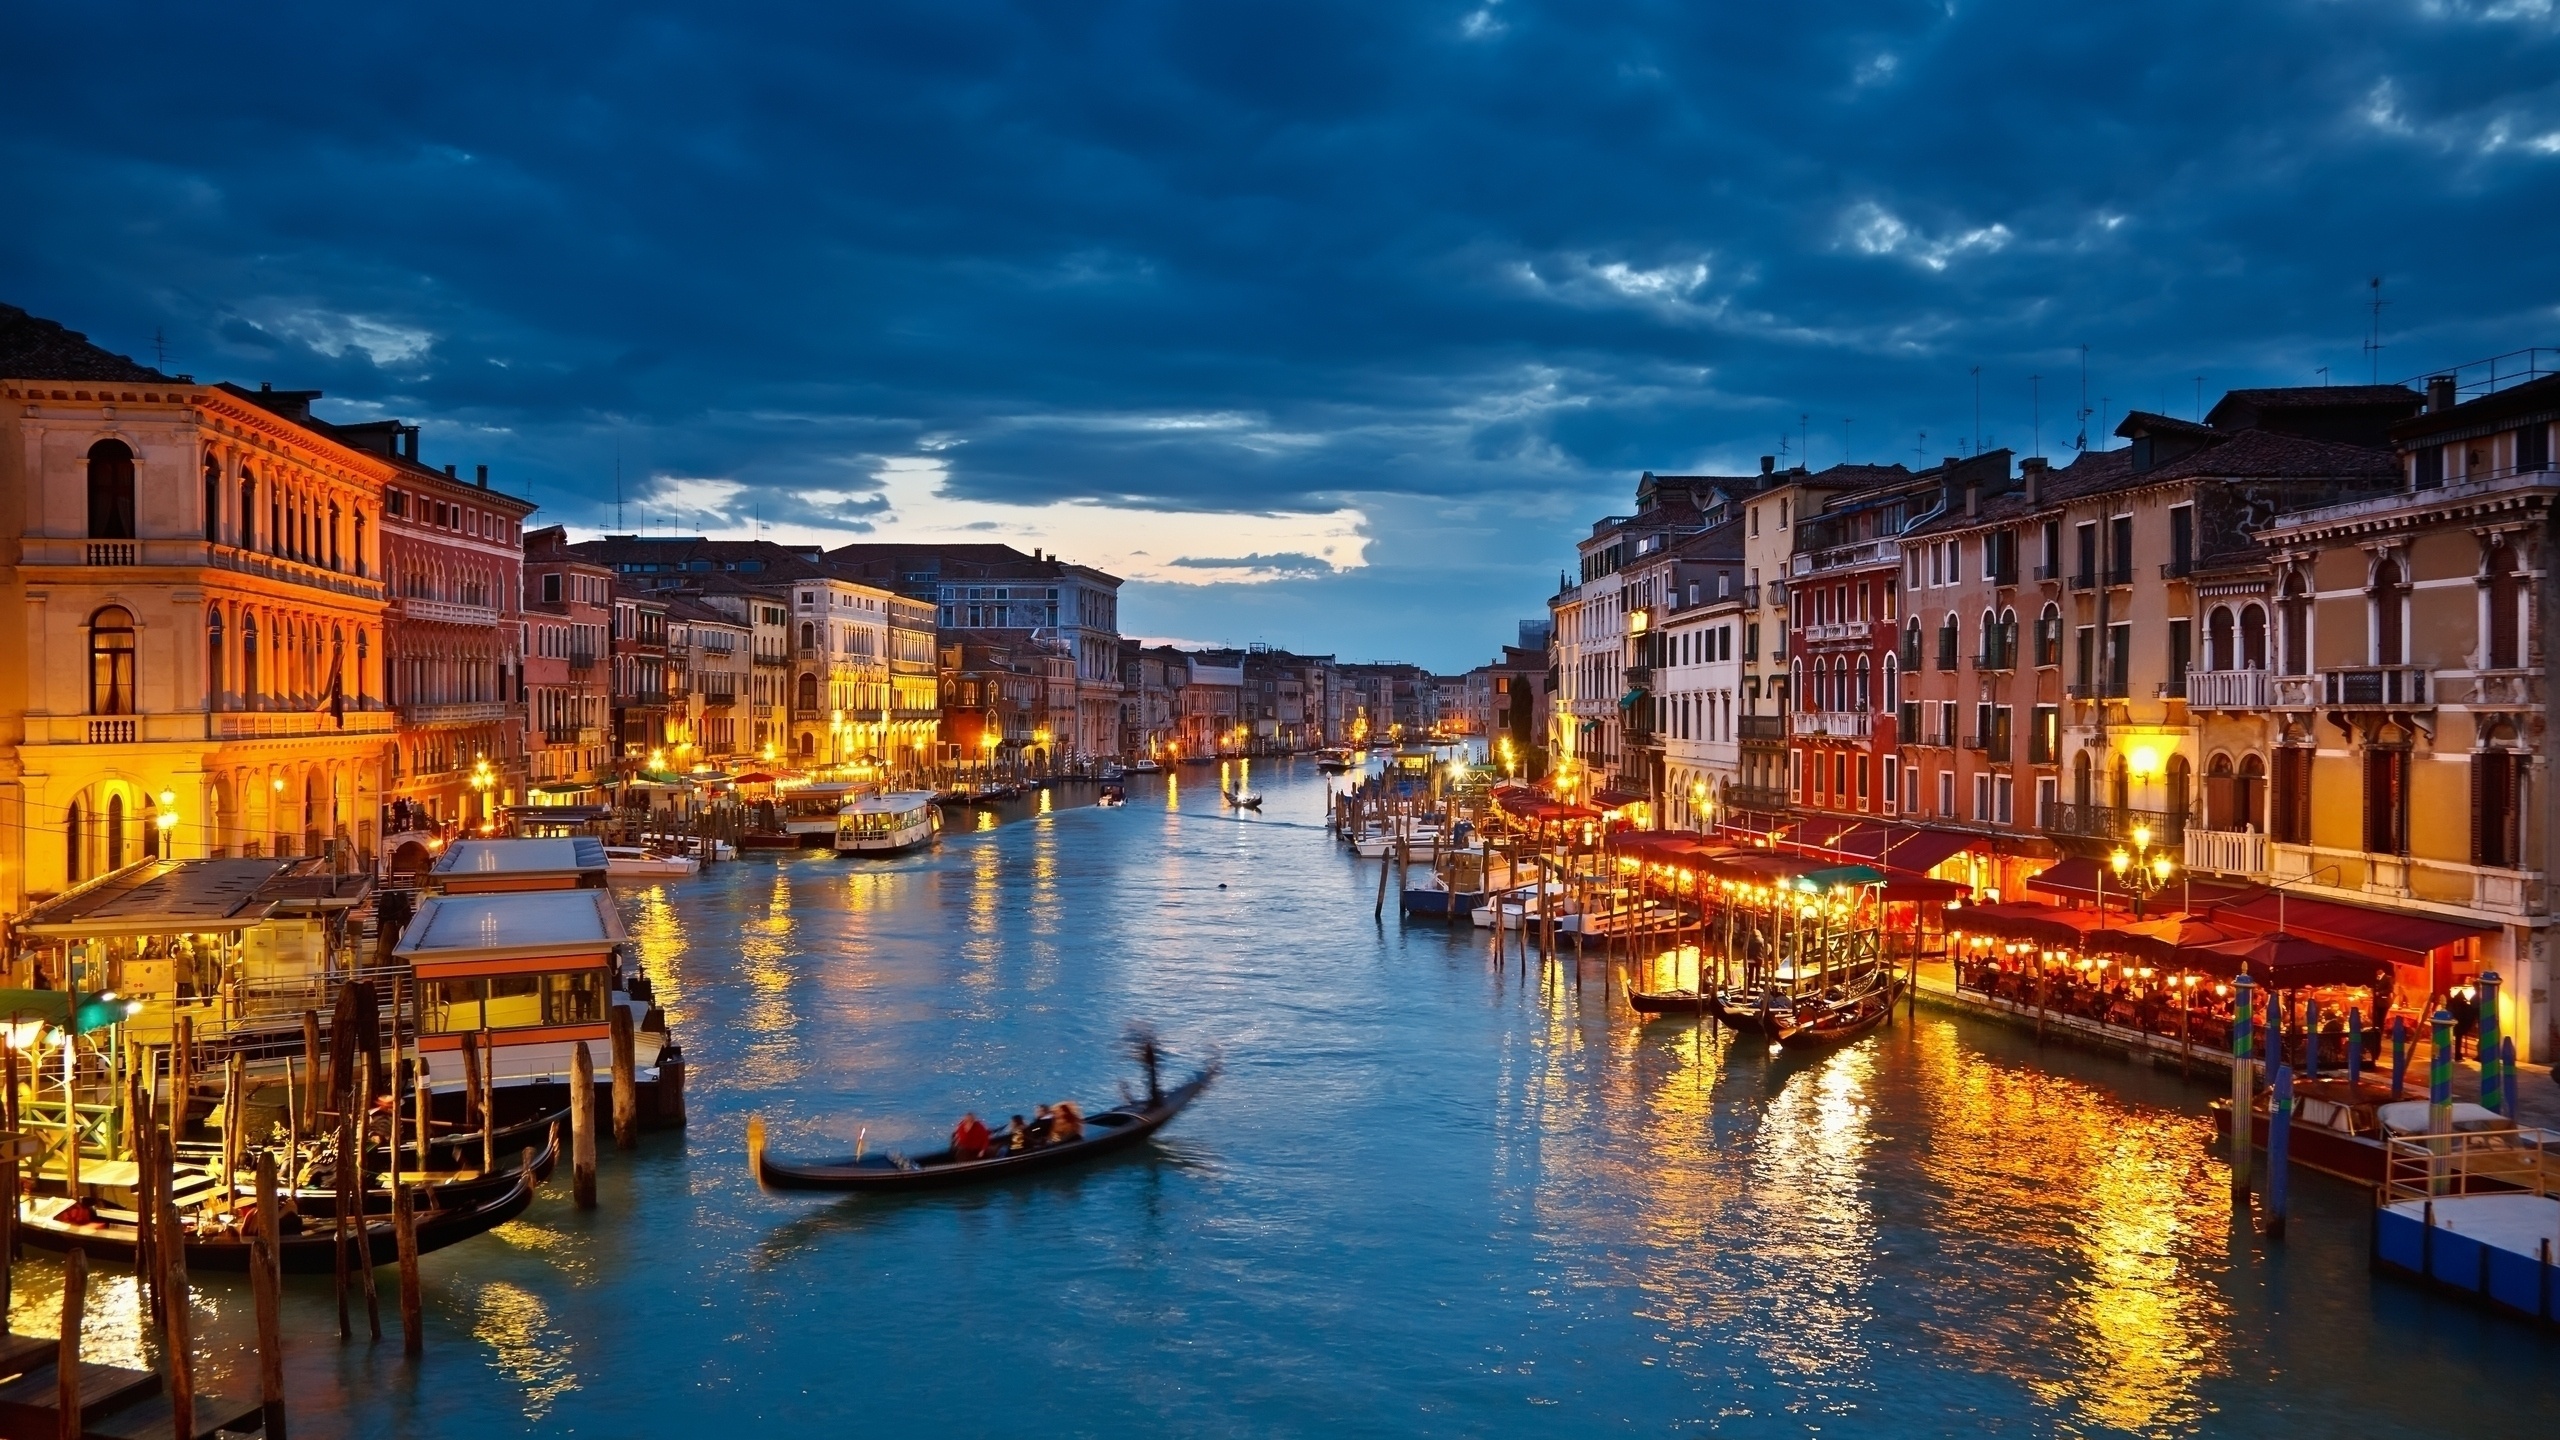 Night In Venice Desktop Wallpaper